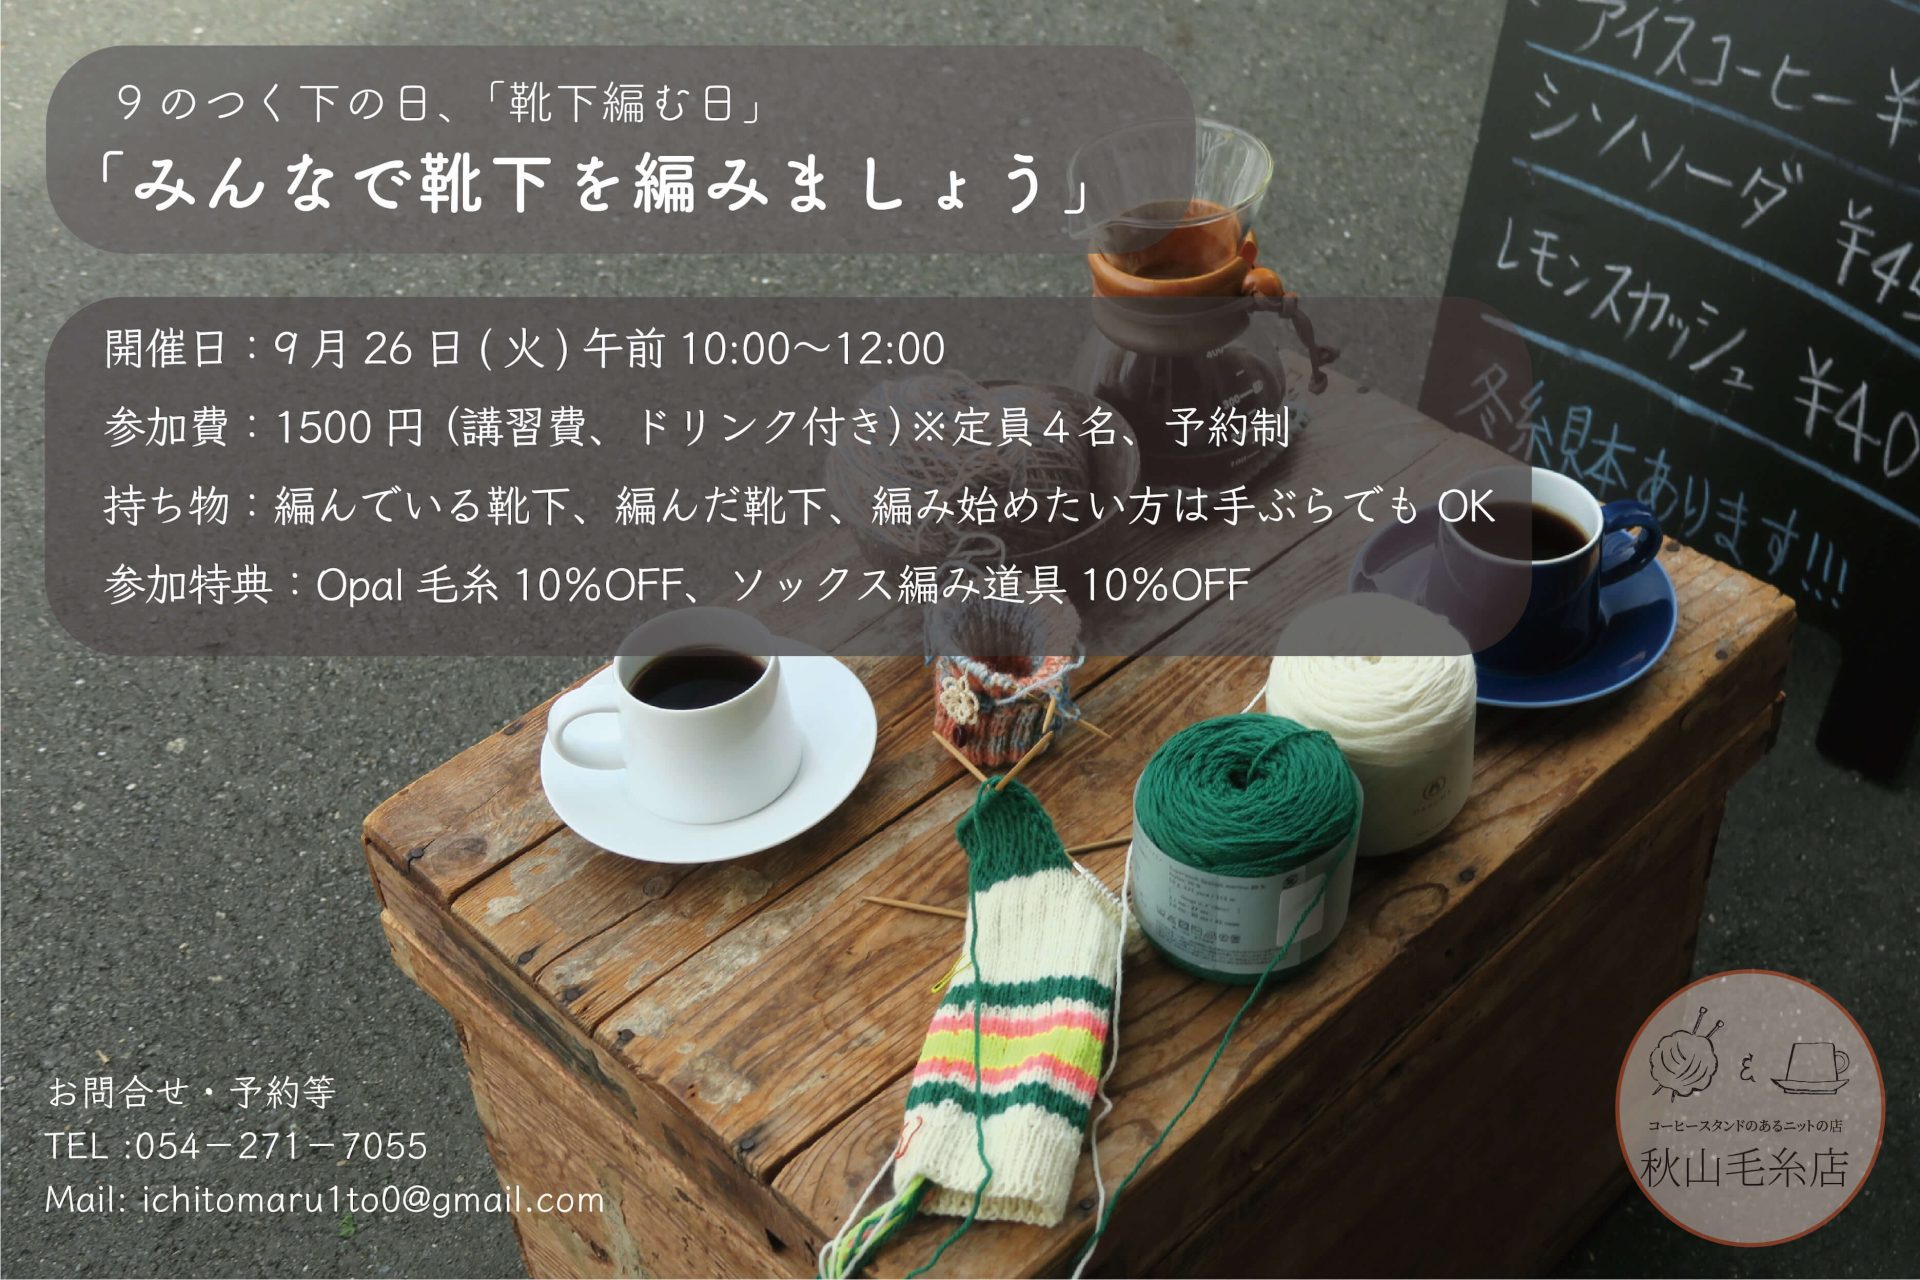 【WS終了】9月26日(火)、30日(土)は「靴下編みましょうの会」と「編み物談義」